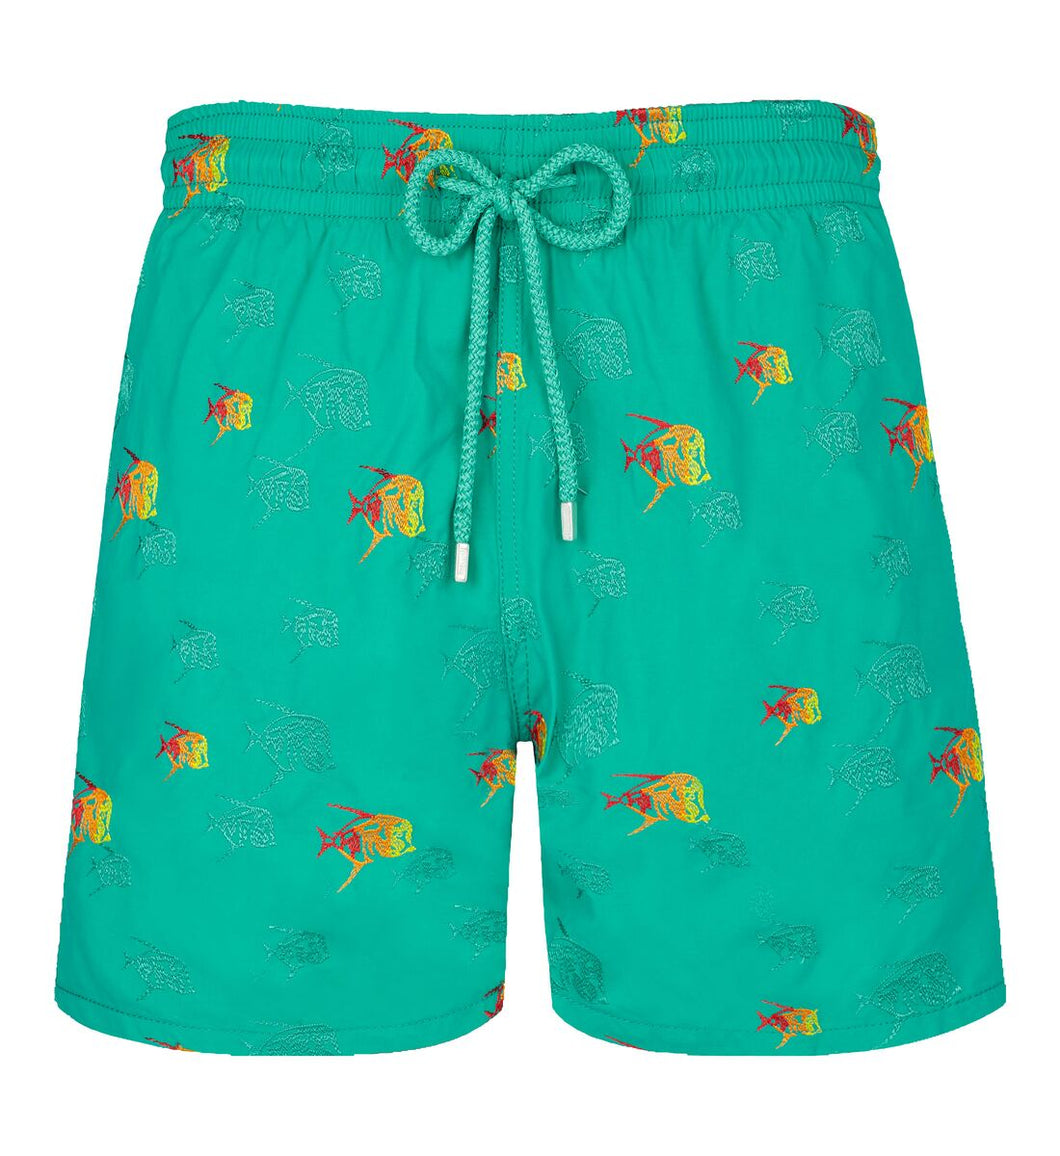 Swim Shorts Embroidered Piranhas - Limited Edition